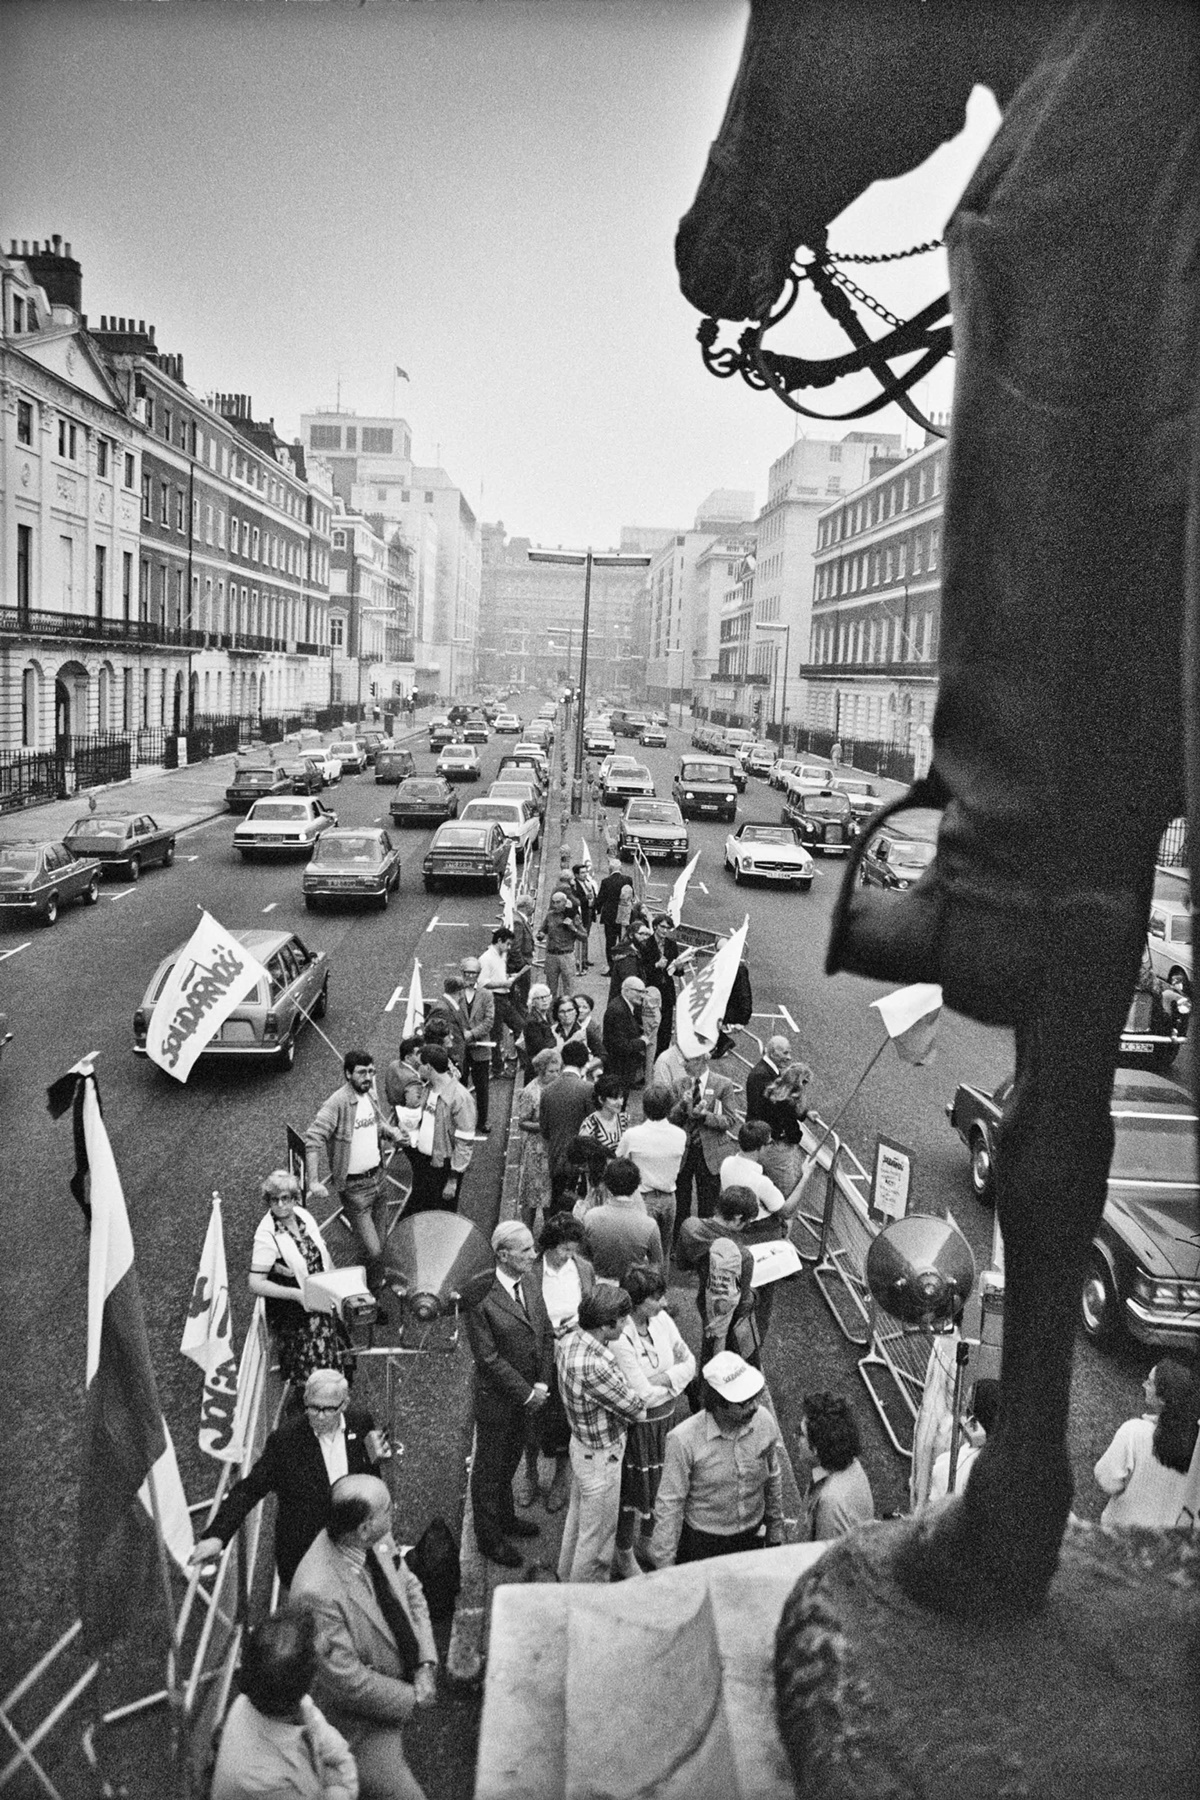 Solidarity Movement by Shahidul Alam (1981, UK)